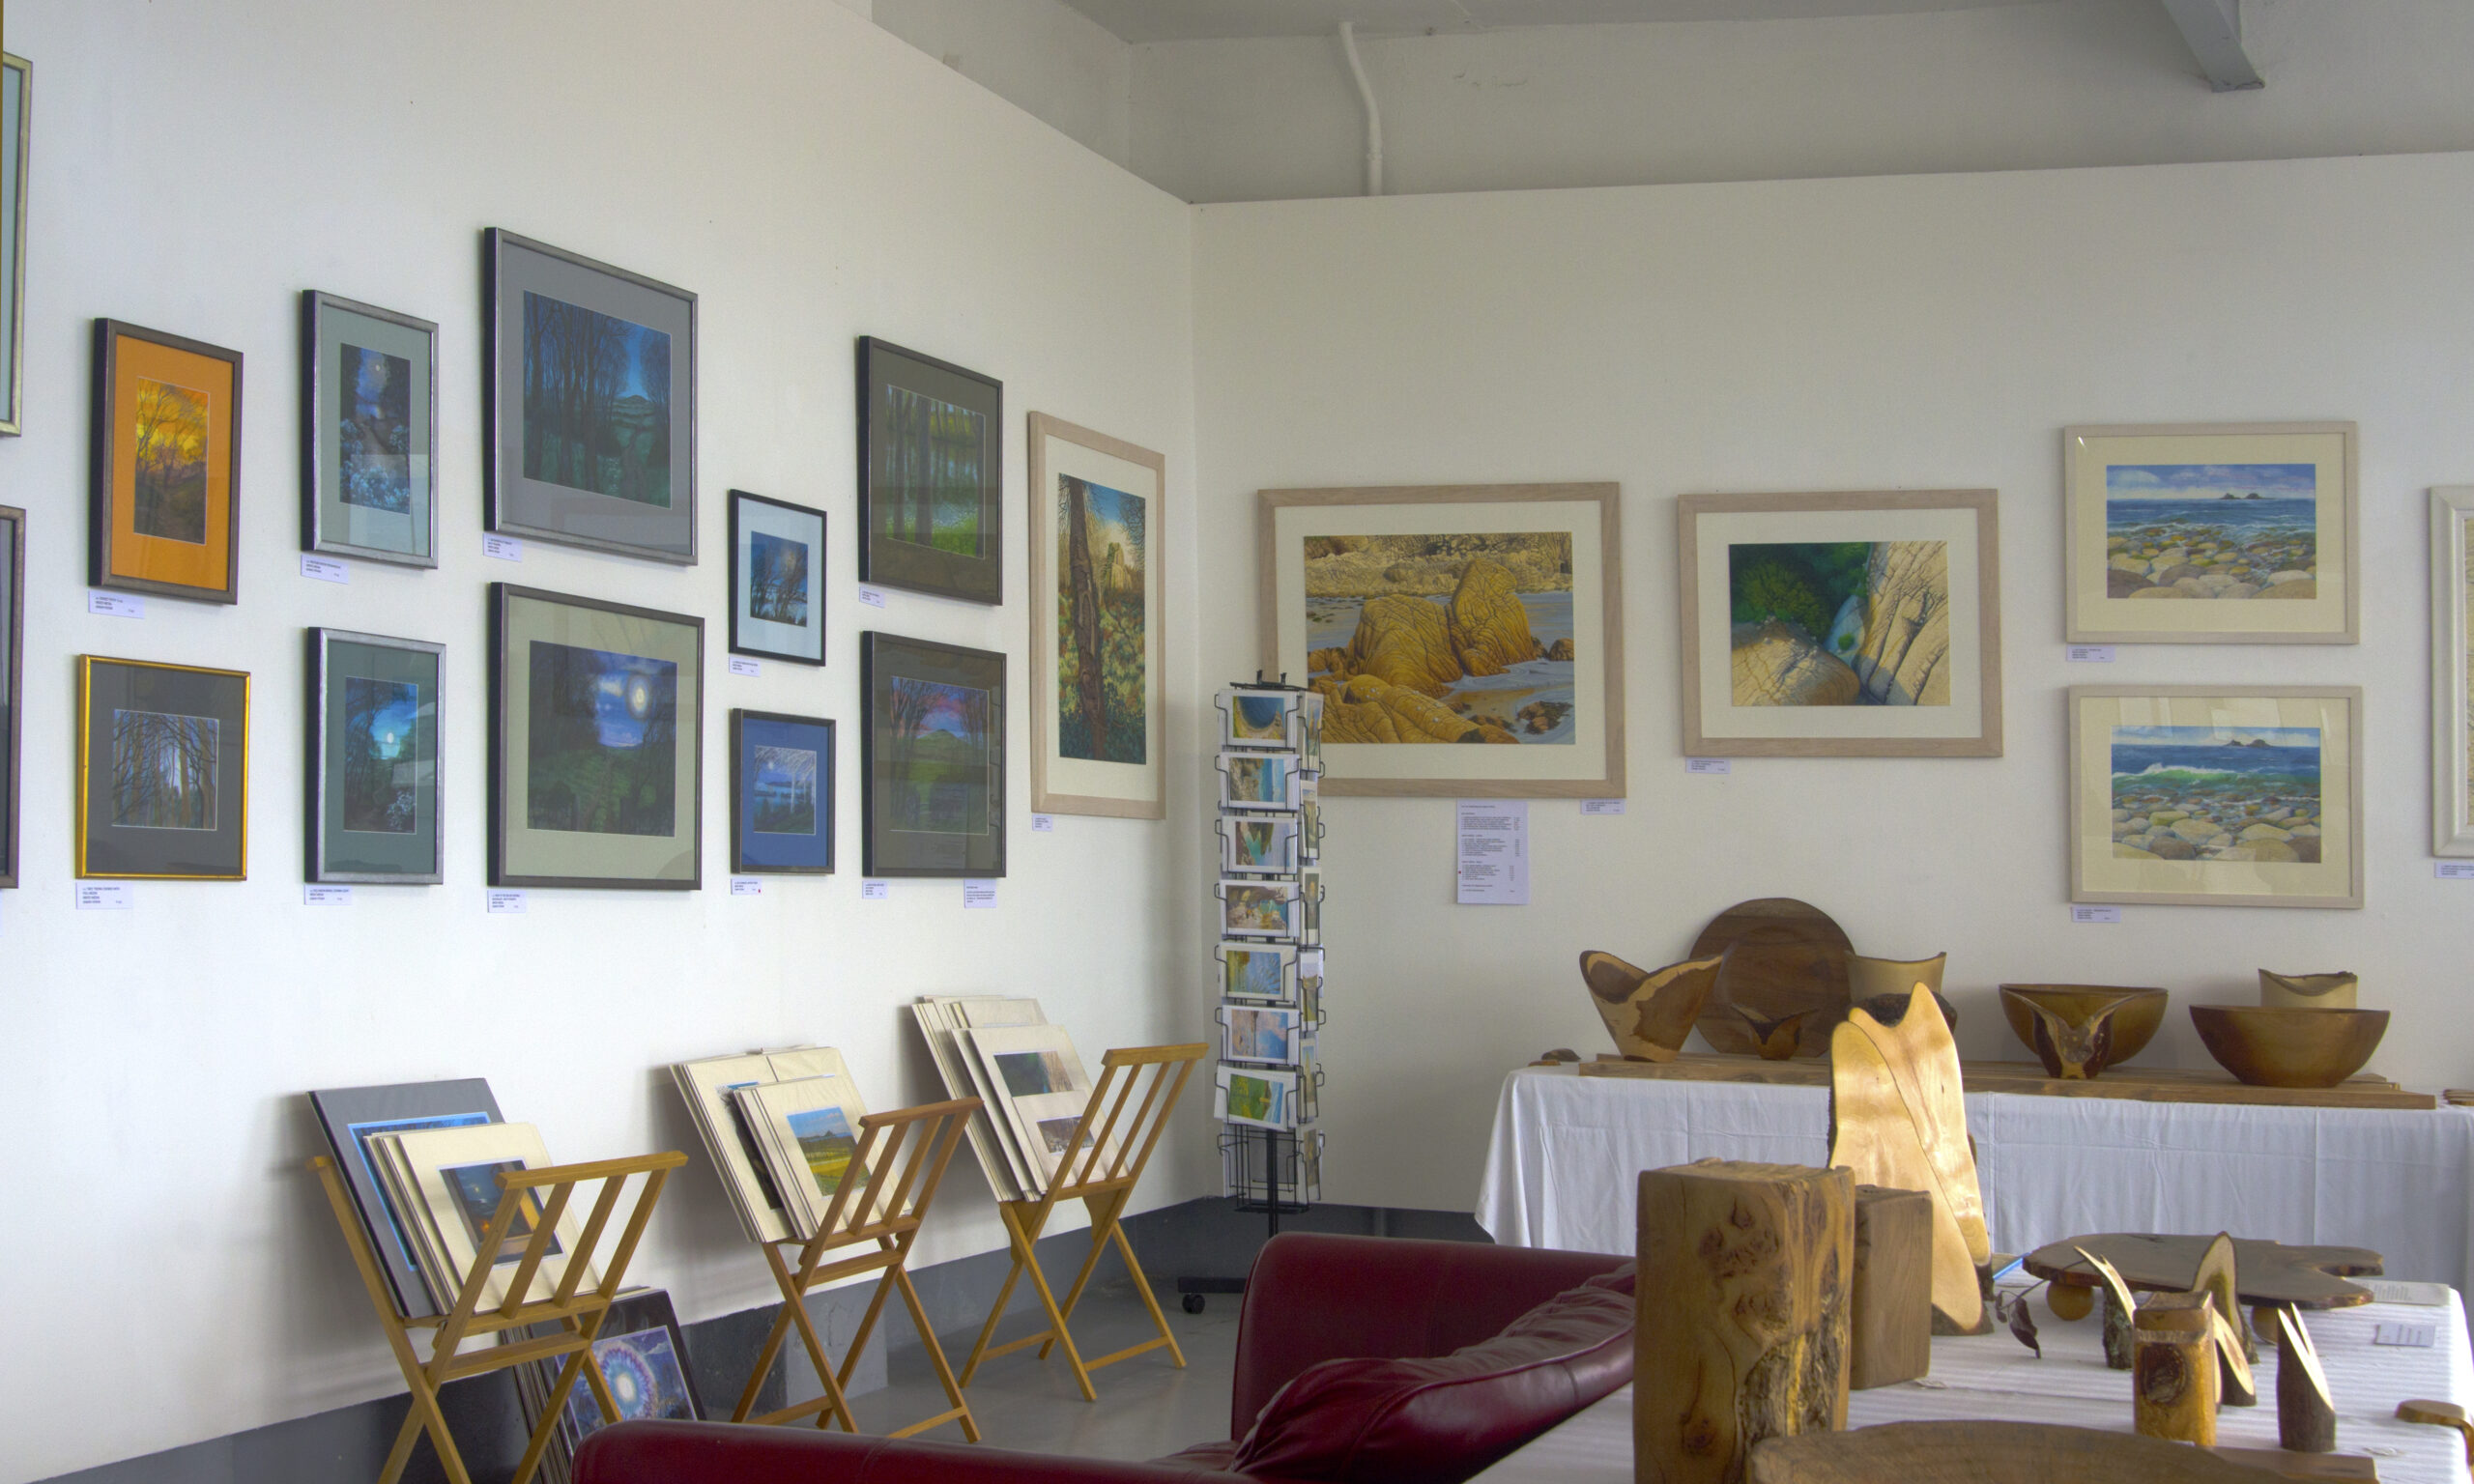 PZ Gallery Exhibition of Cornish Artist Sarah Vivian's Paintings